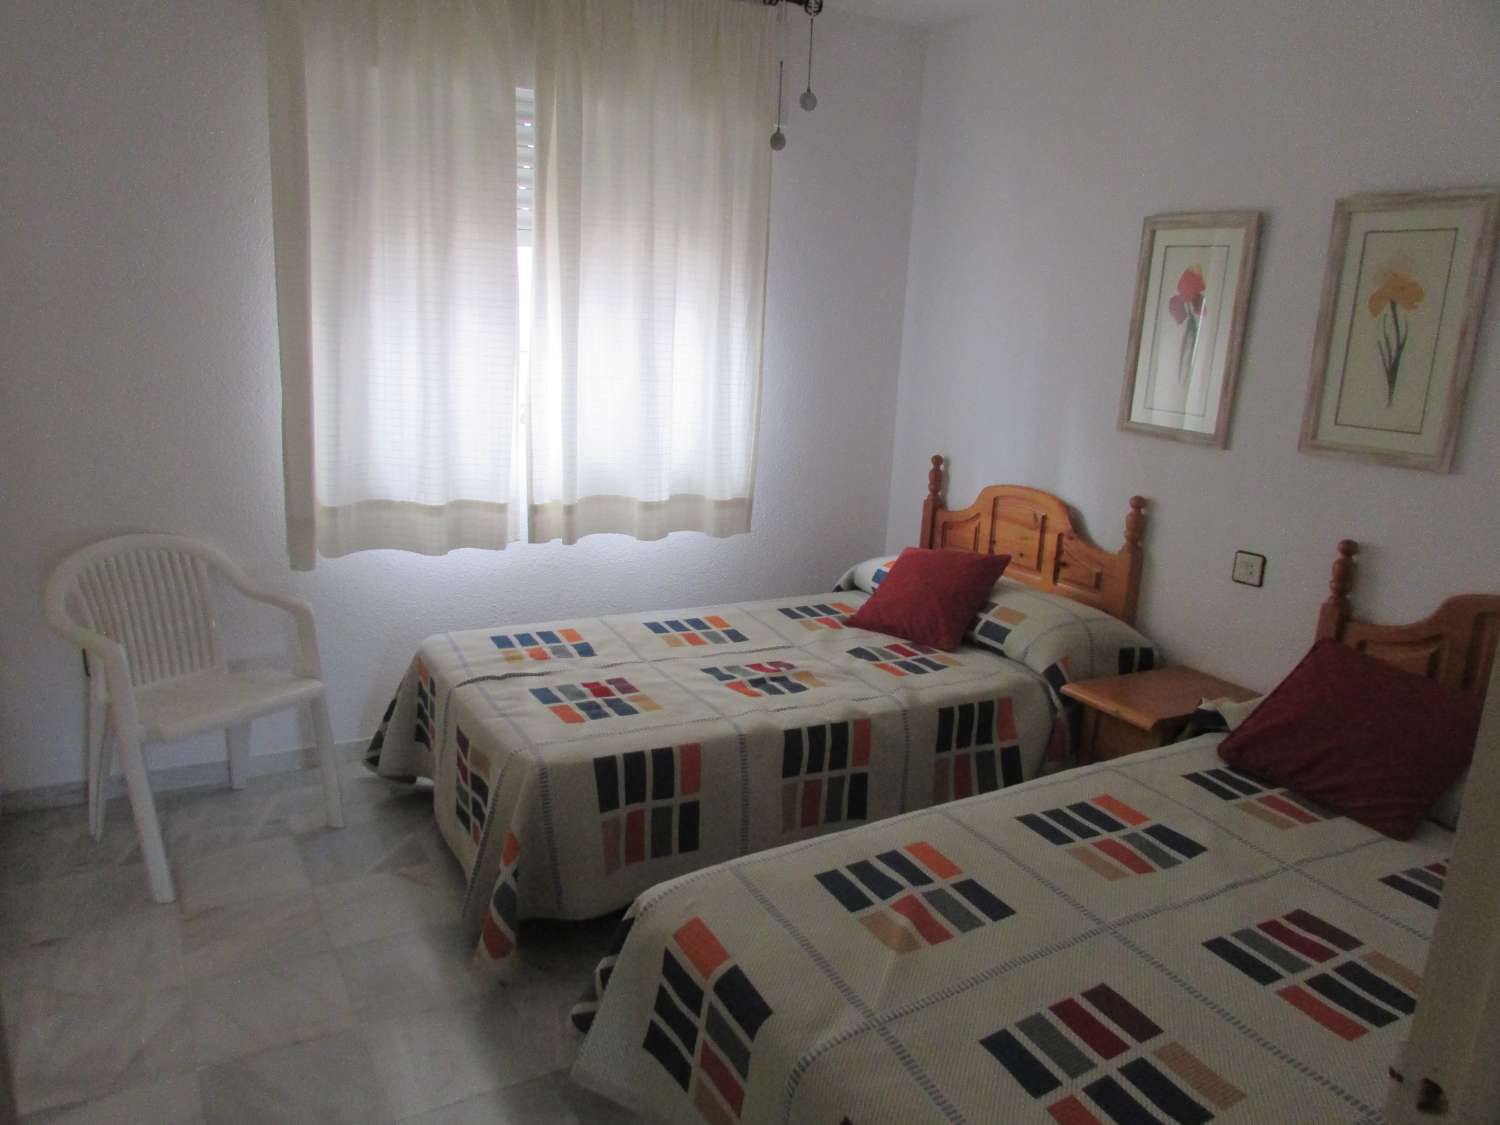 Estupendo apartamento con amplia terraza en venta en Urb Perla de Andalucia